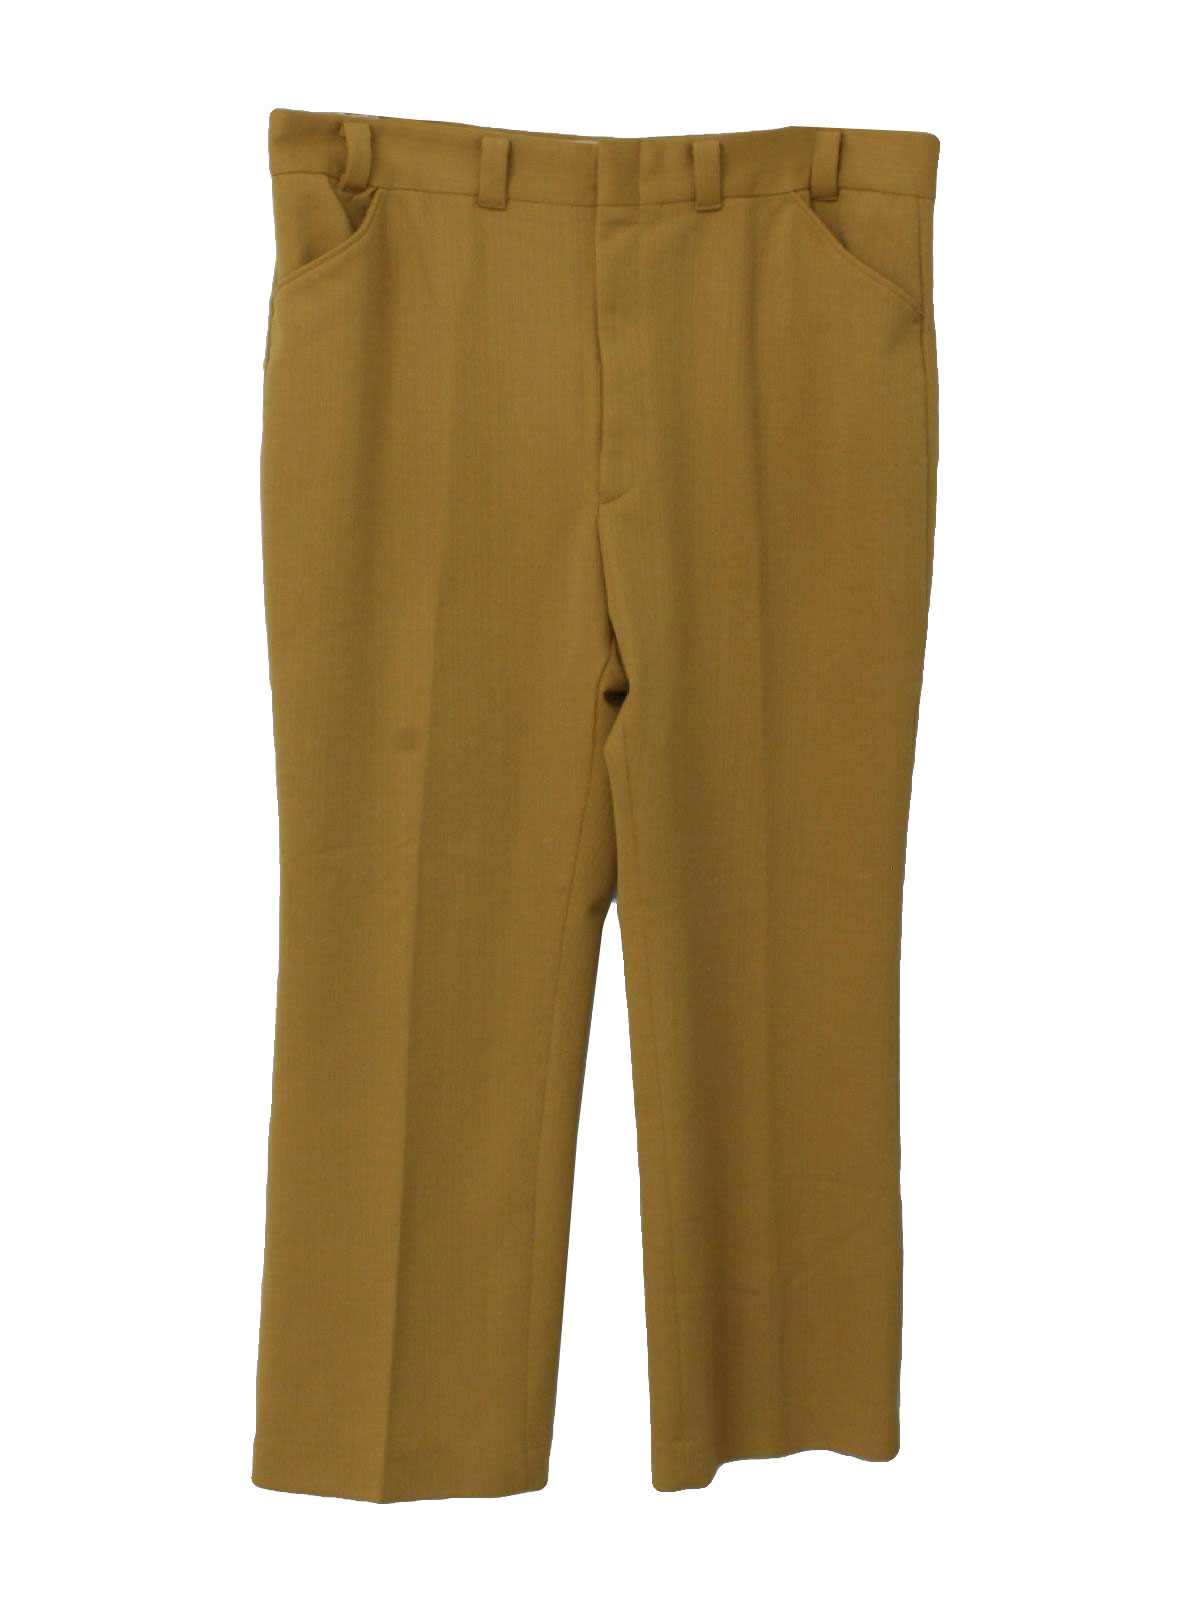 Sixties Haband Pants: Late 60s -Haband- Mens dijon yellow background ...